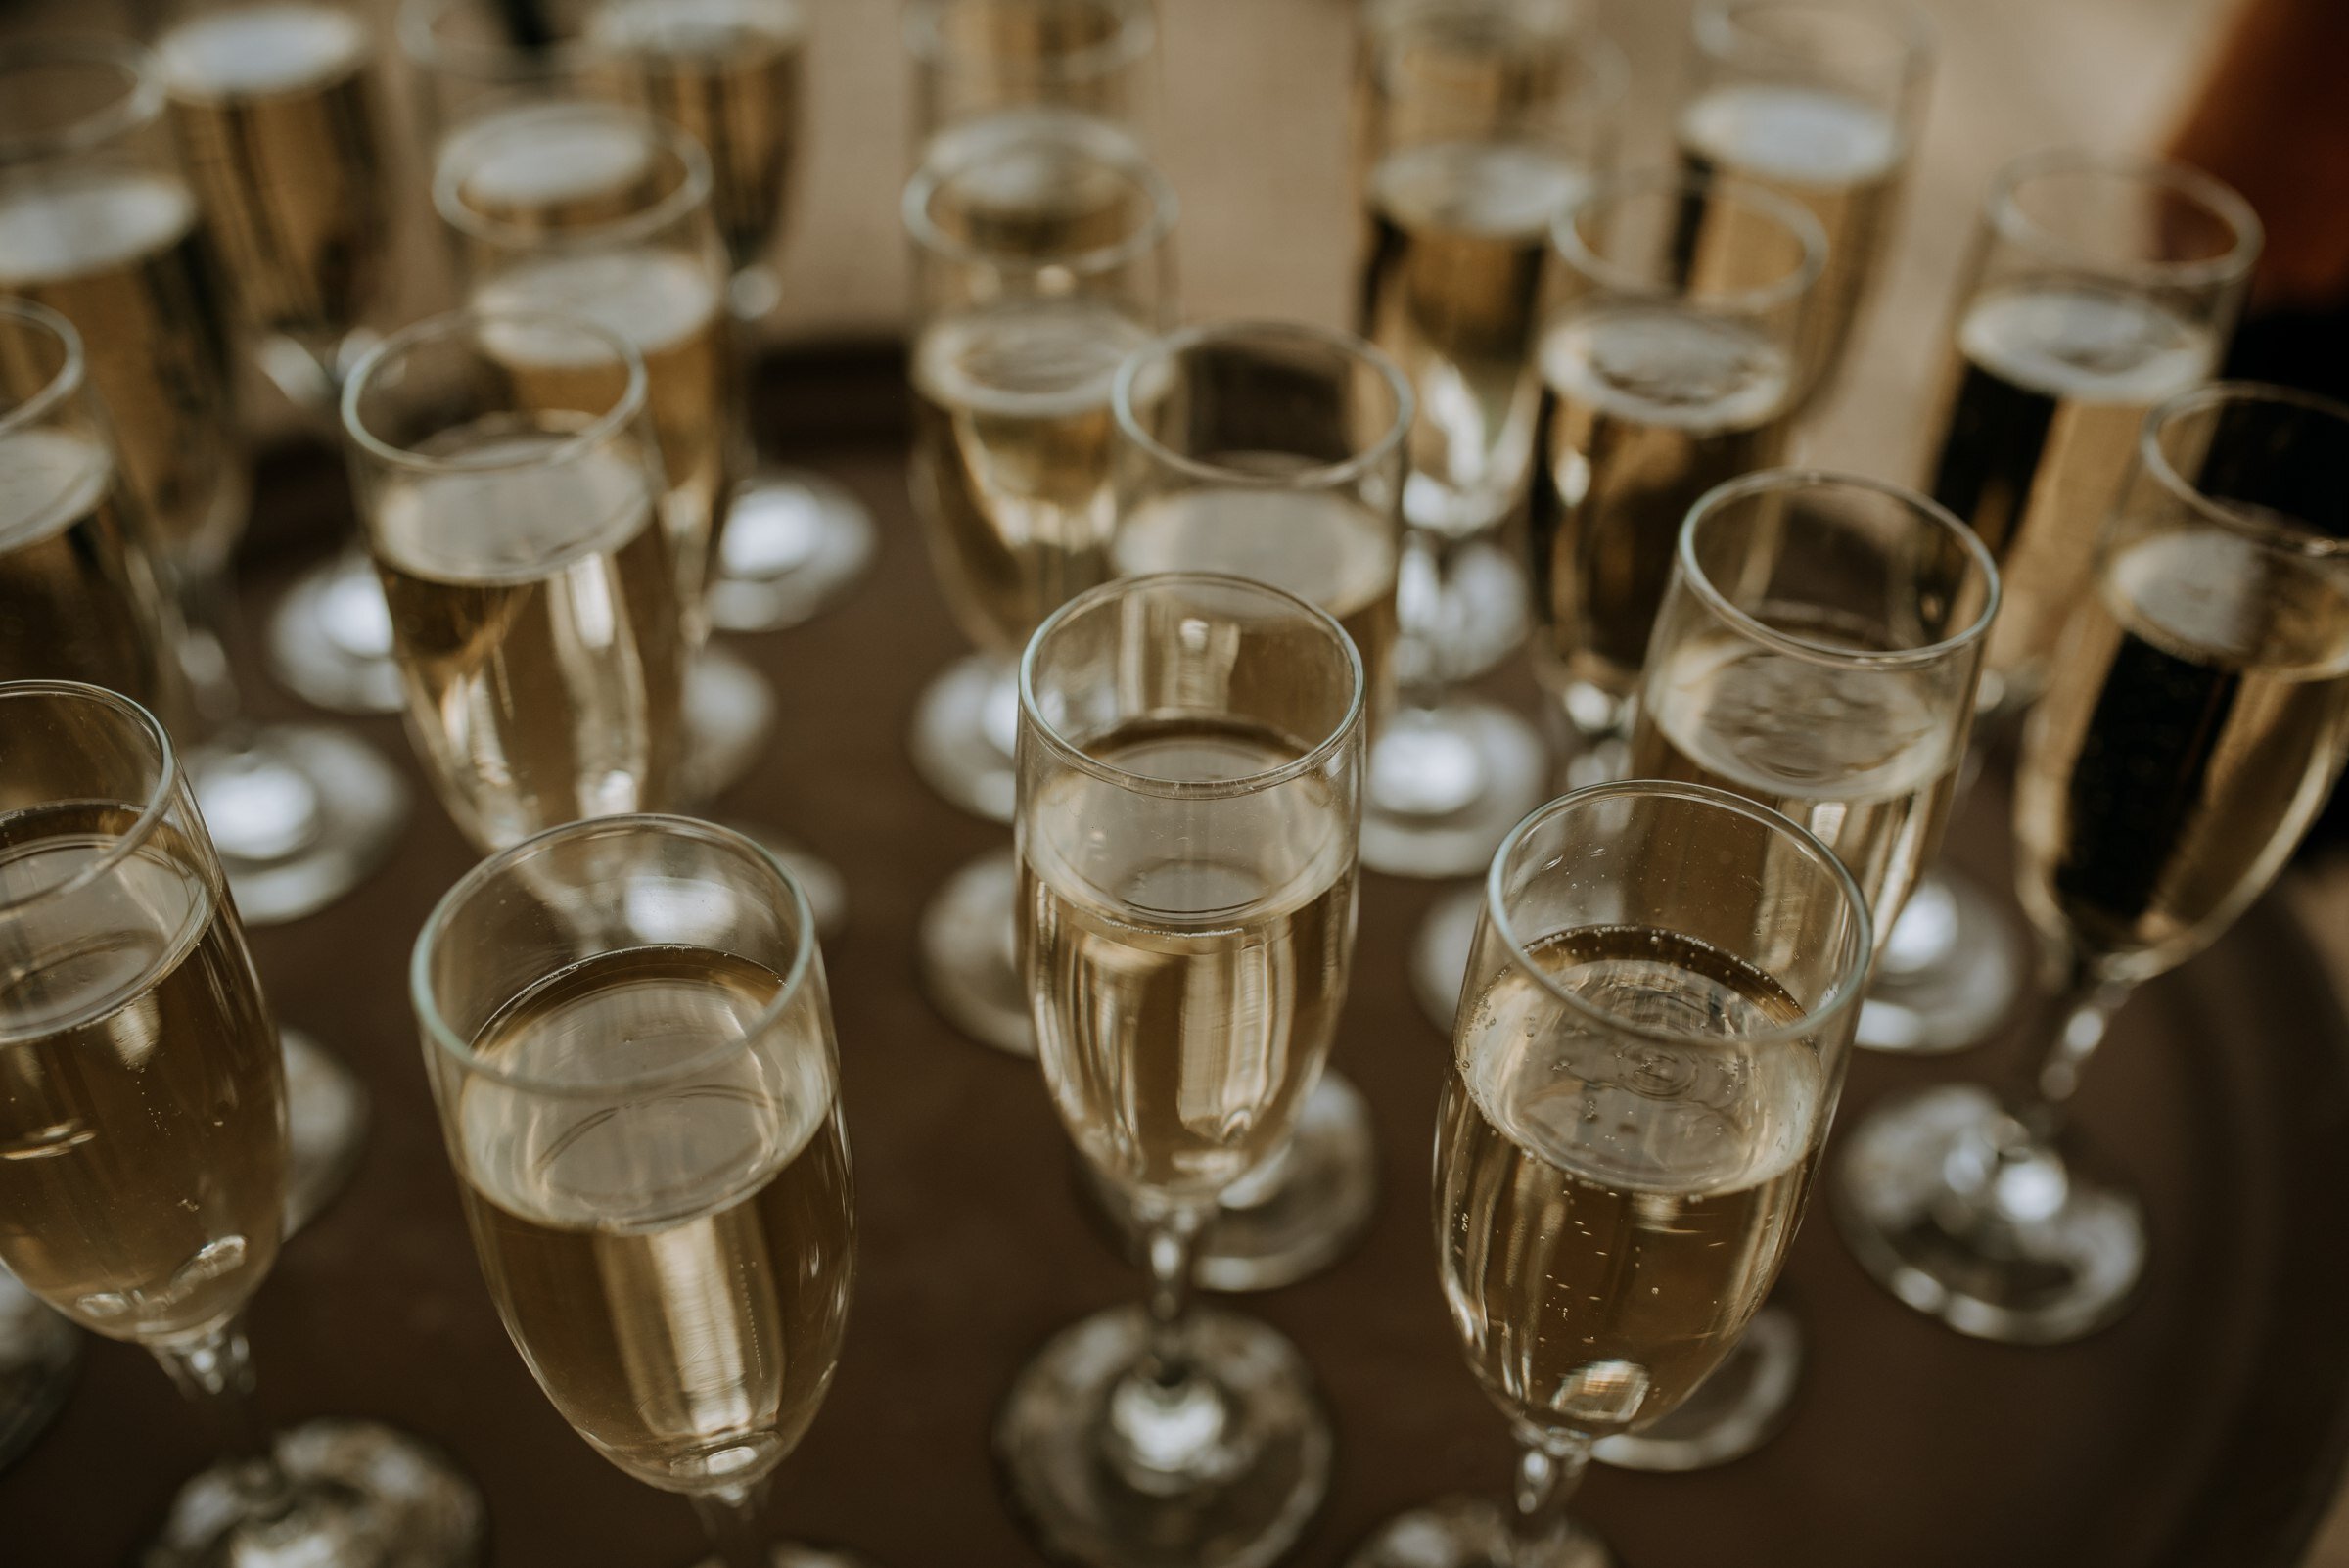  champagne flutes wedding austin texas 